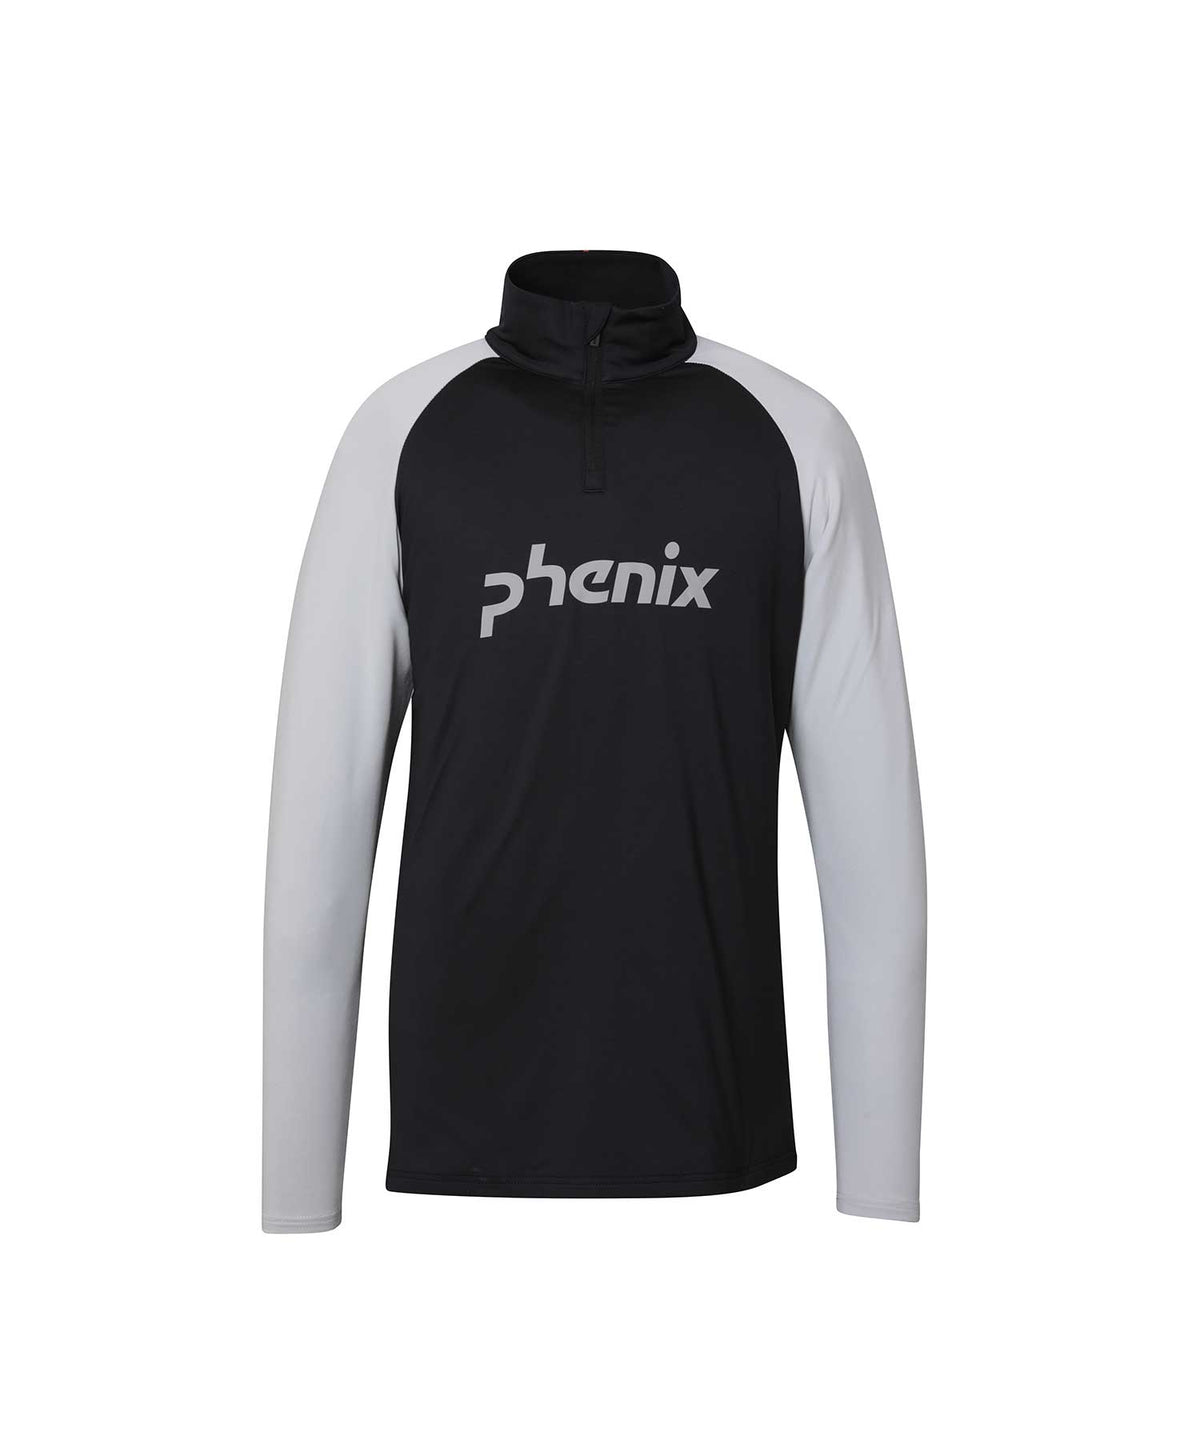 phenix | MENS - phenix Online Store